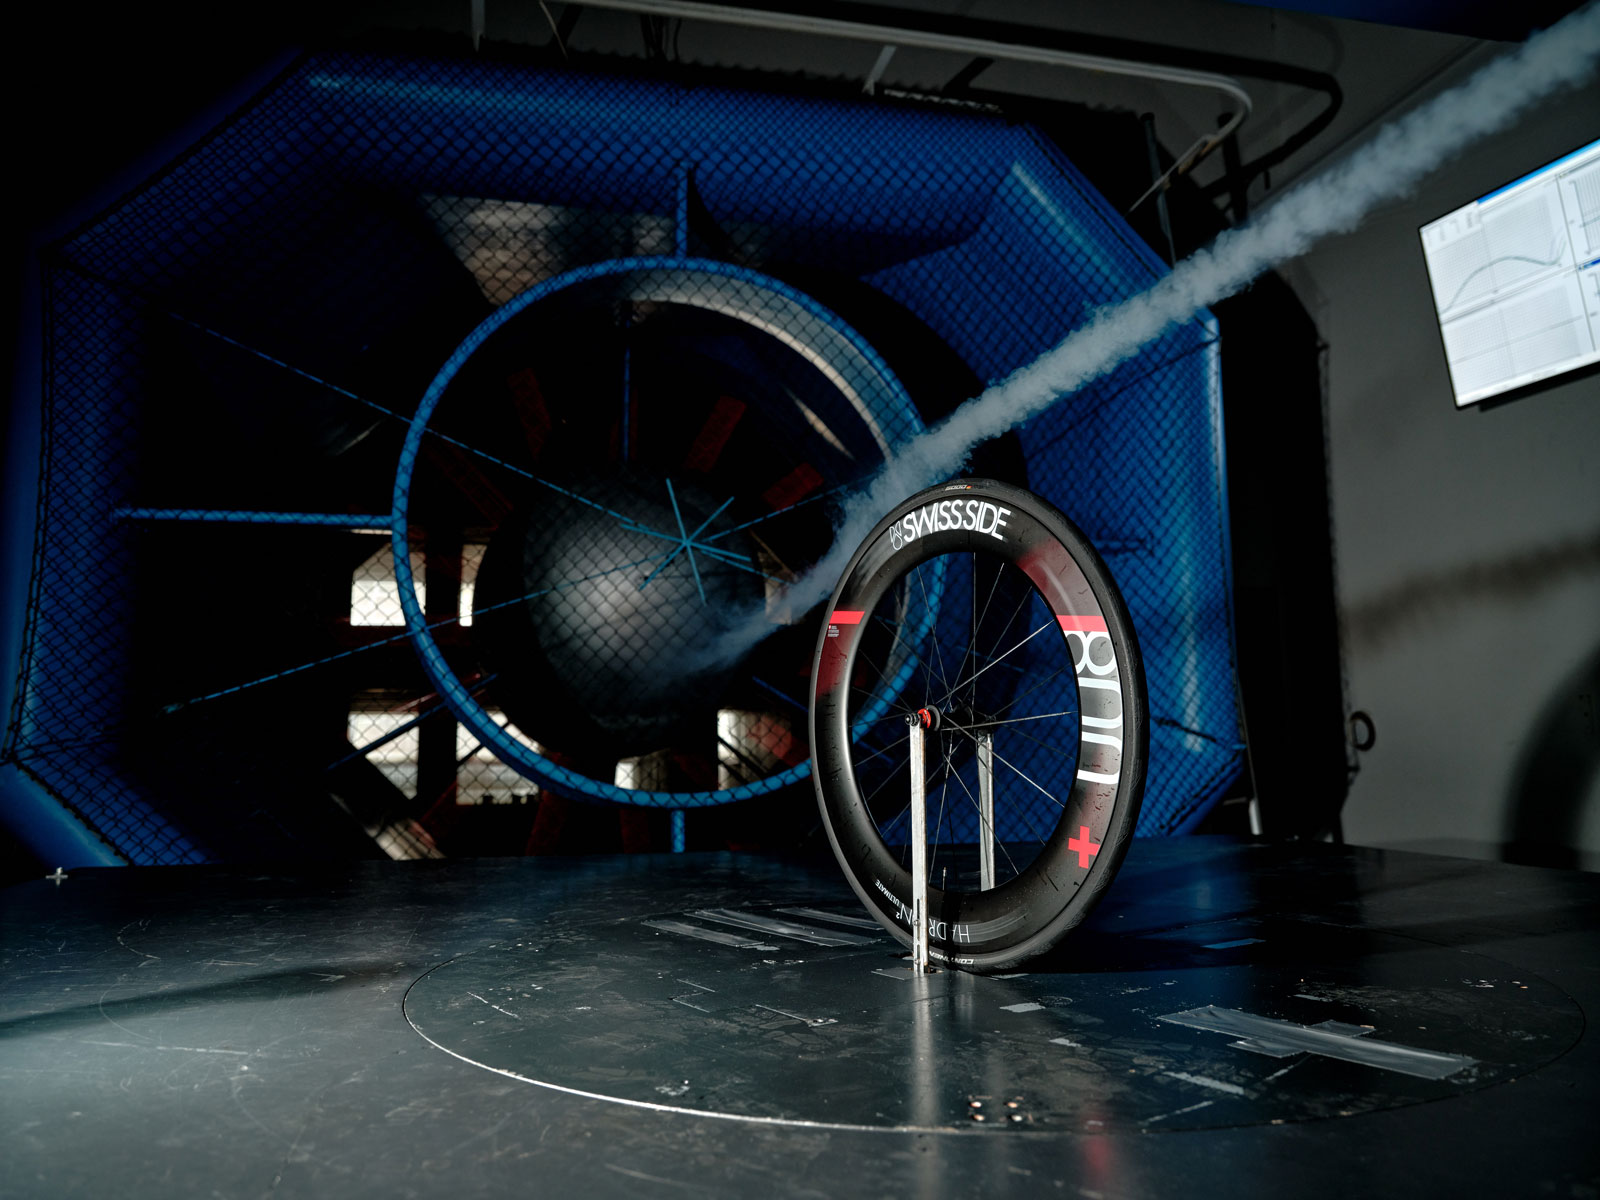 swiss side aero road wheel testing wind tunnel